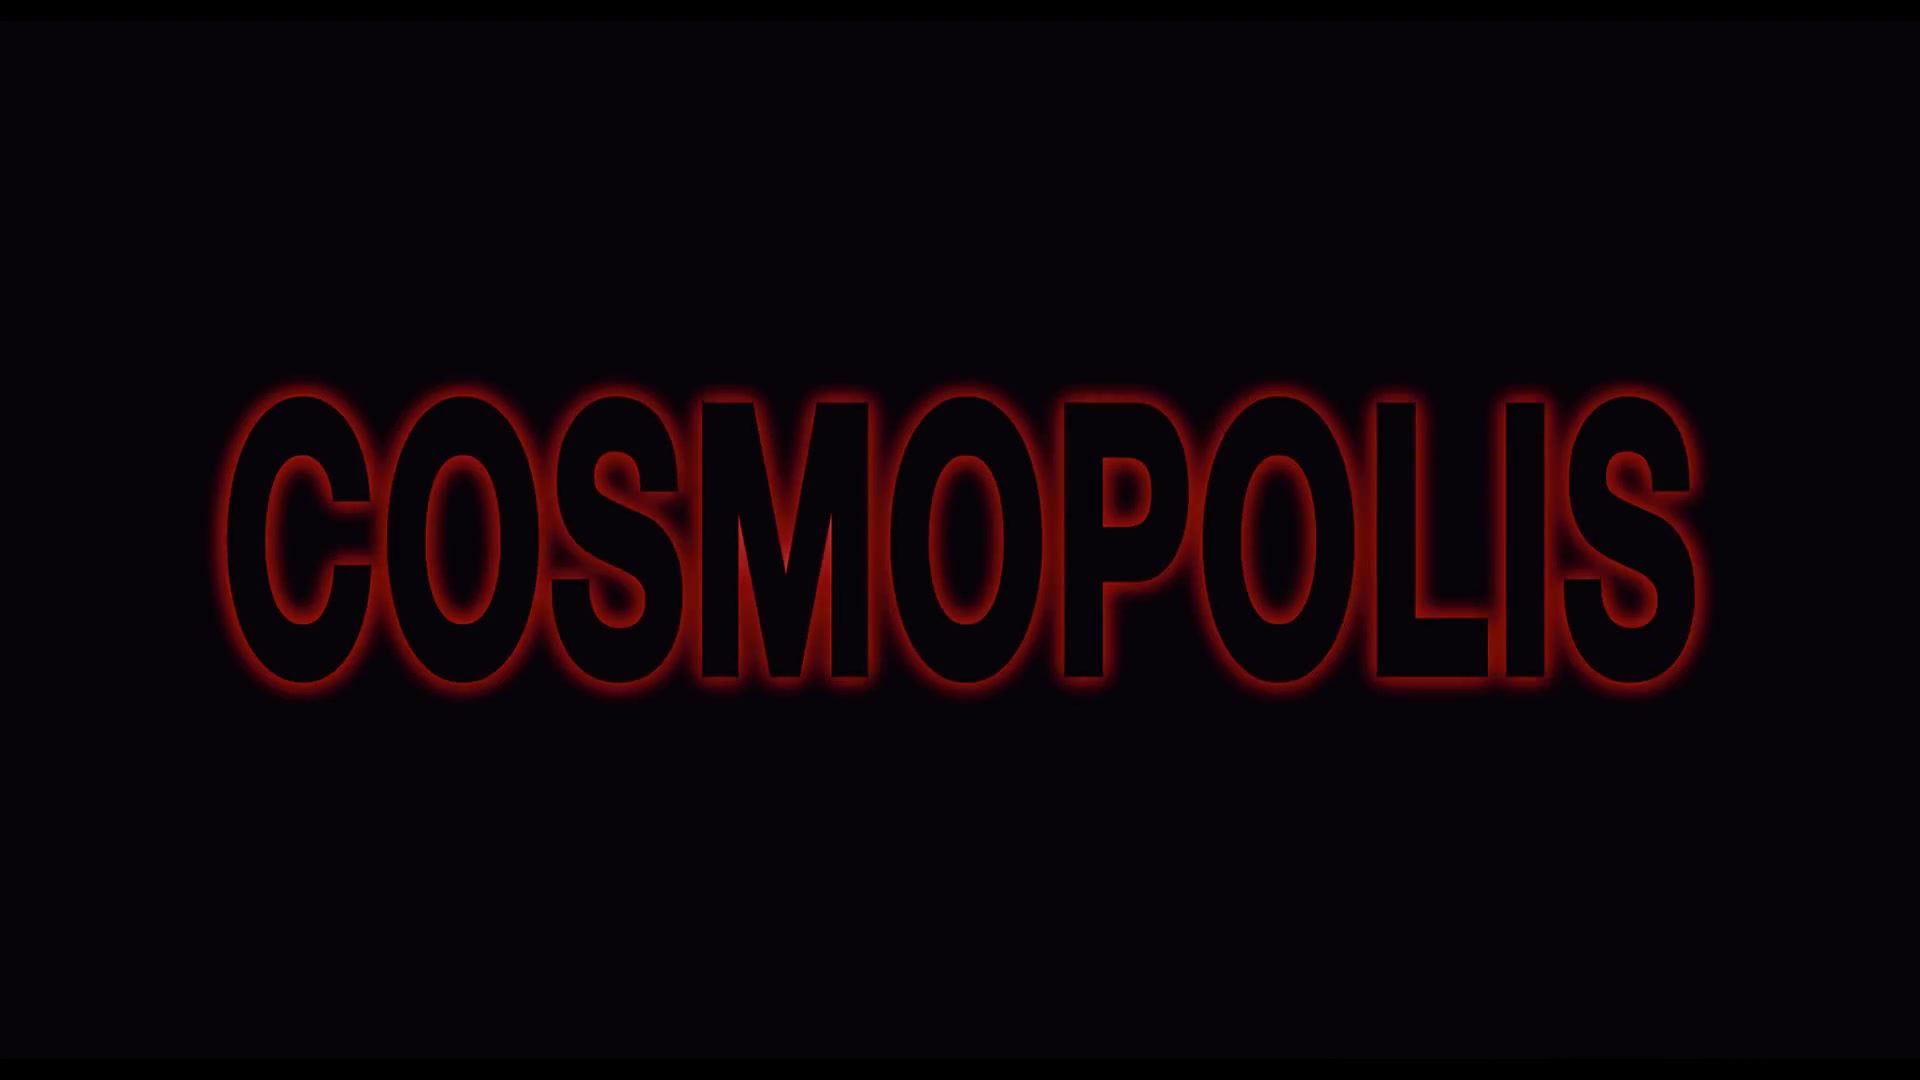 Cosmopolis Teaser pattinson tr 183